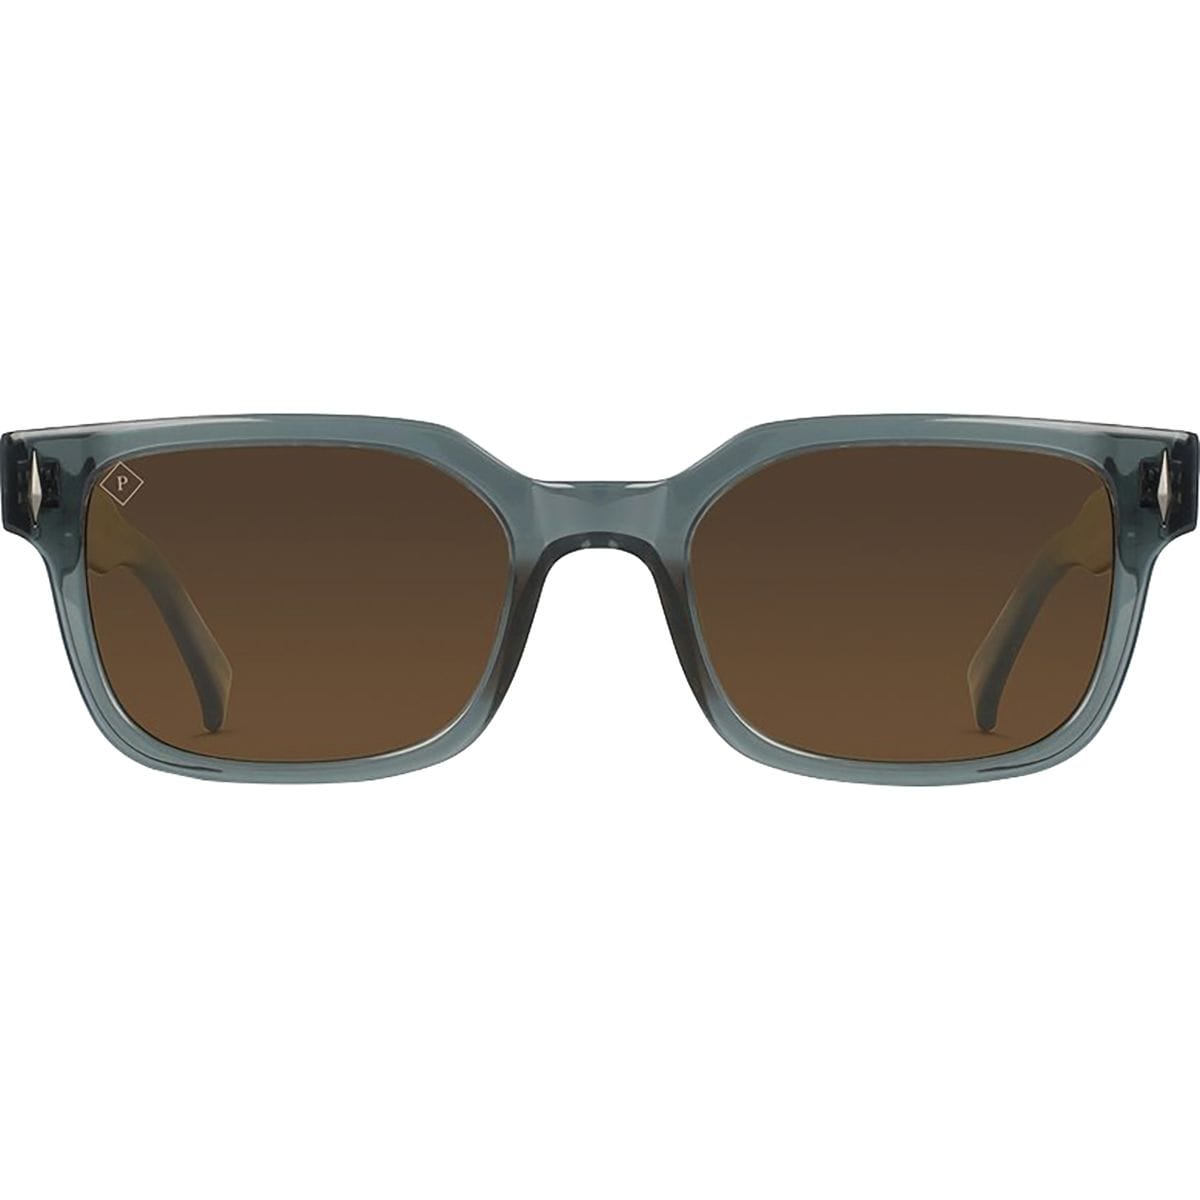 RAEN optics Friar Polarized Sunglasses - Accessories